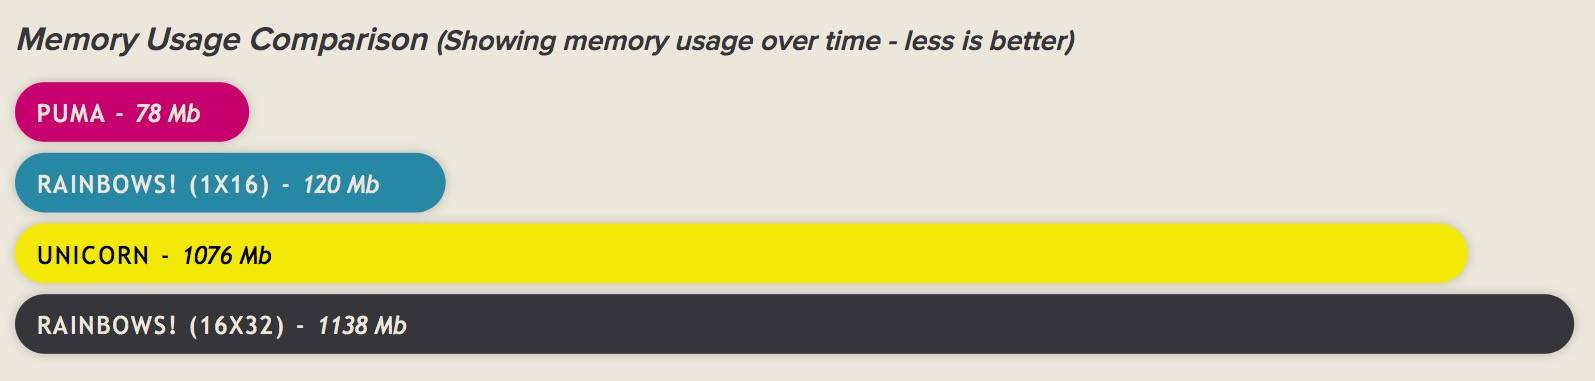 memory-usage-comparision